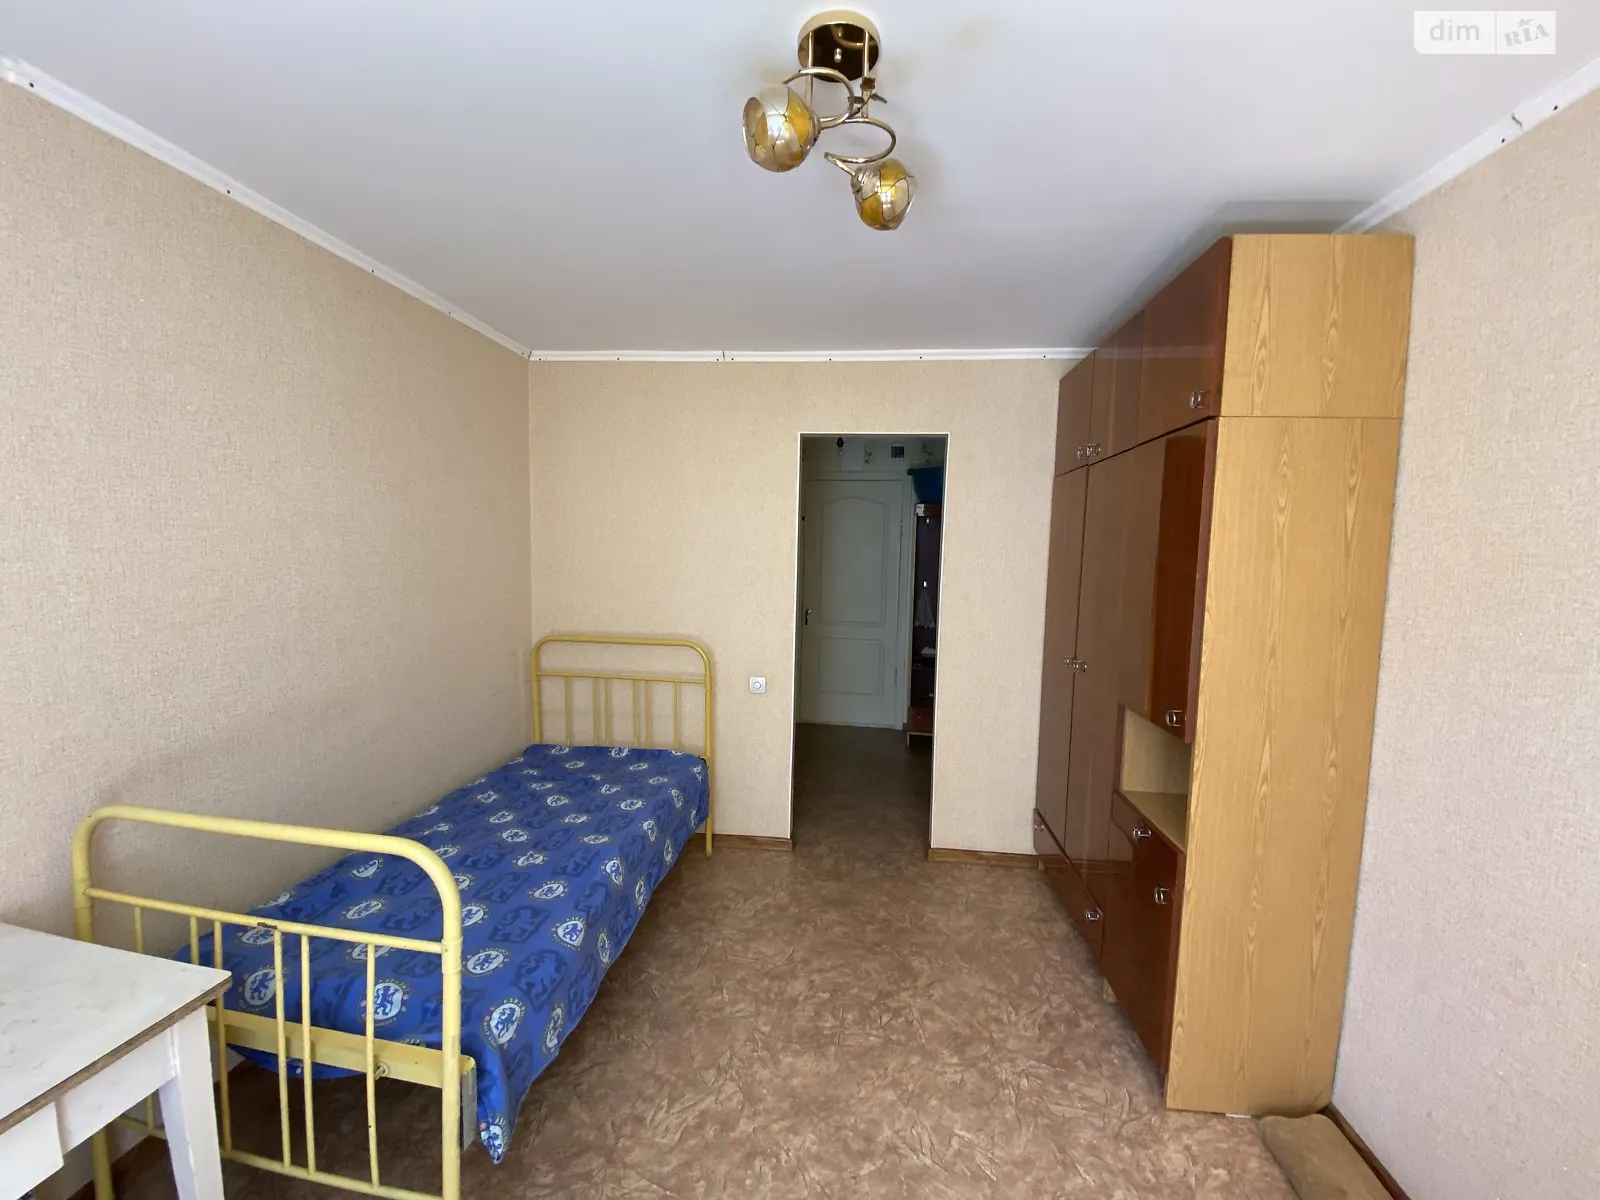 Продается комната 16.7 кв. м в Николаеве - фото 2